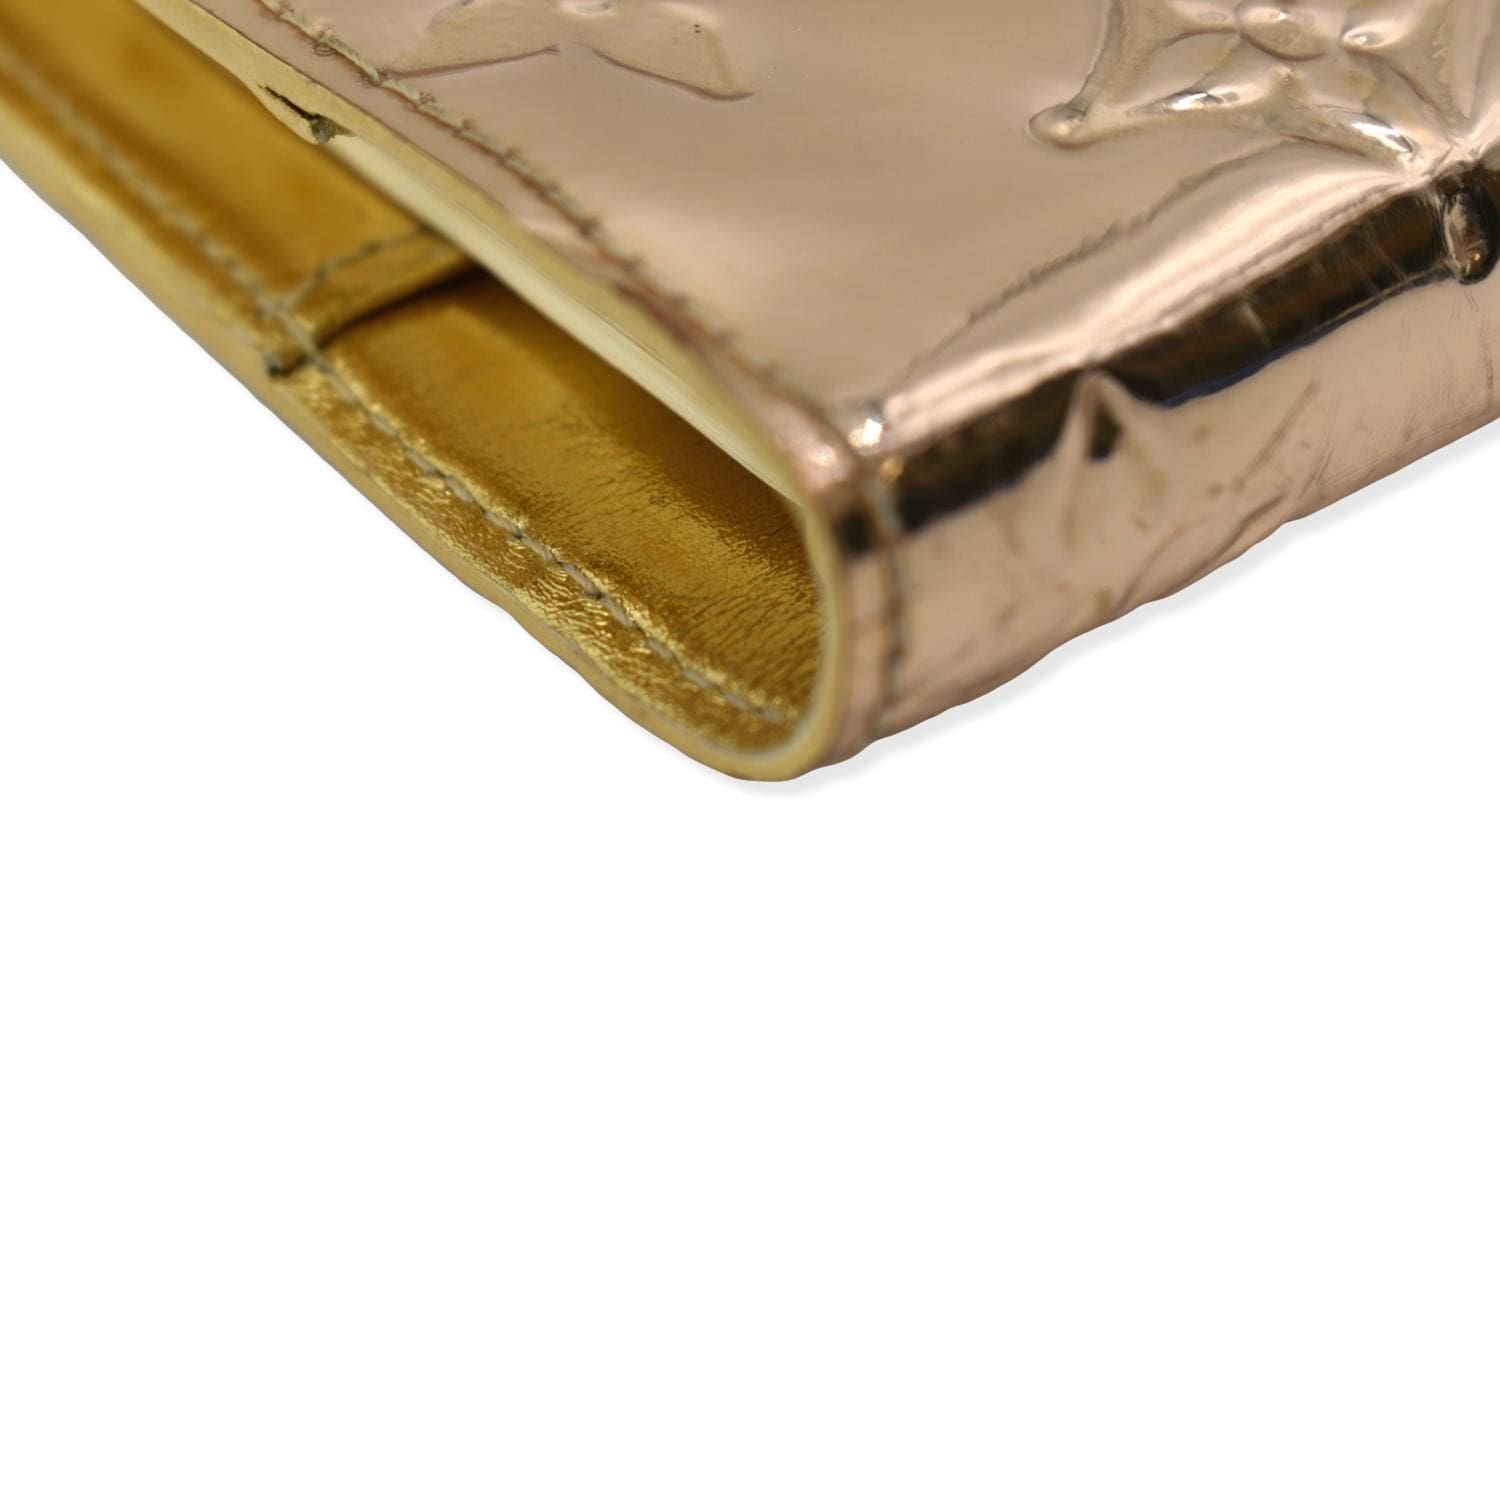 Louis Vuitton Gold Mirror Monogram Vernis Small Agenda Cover